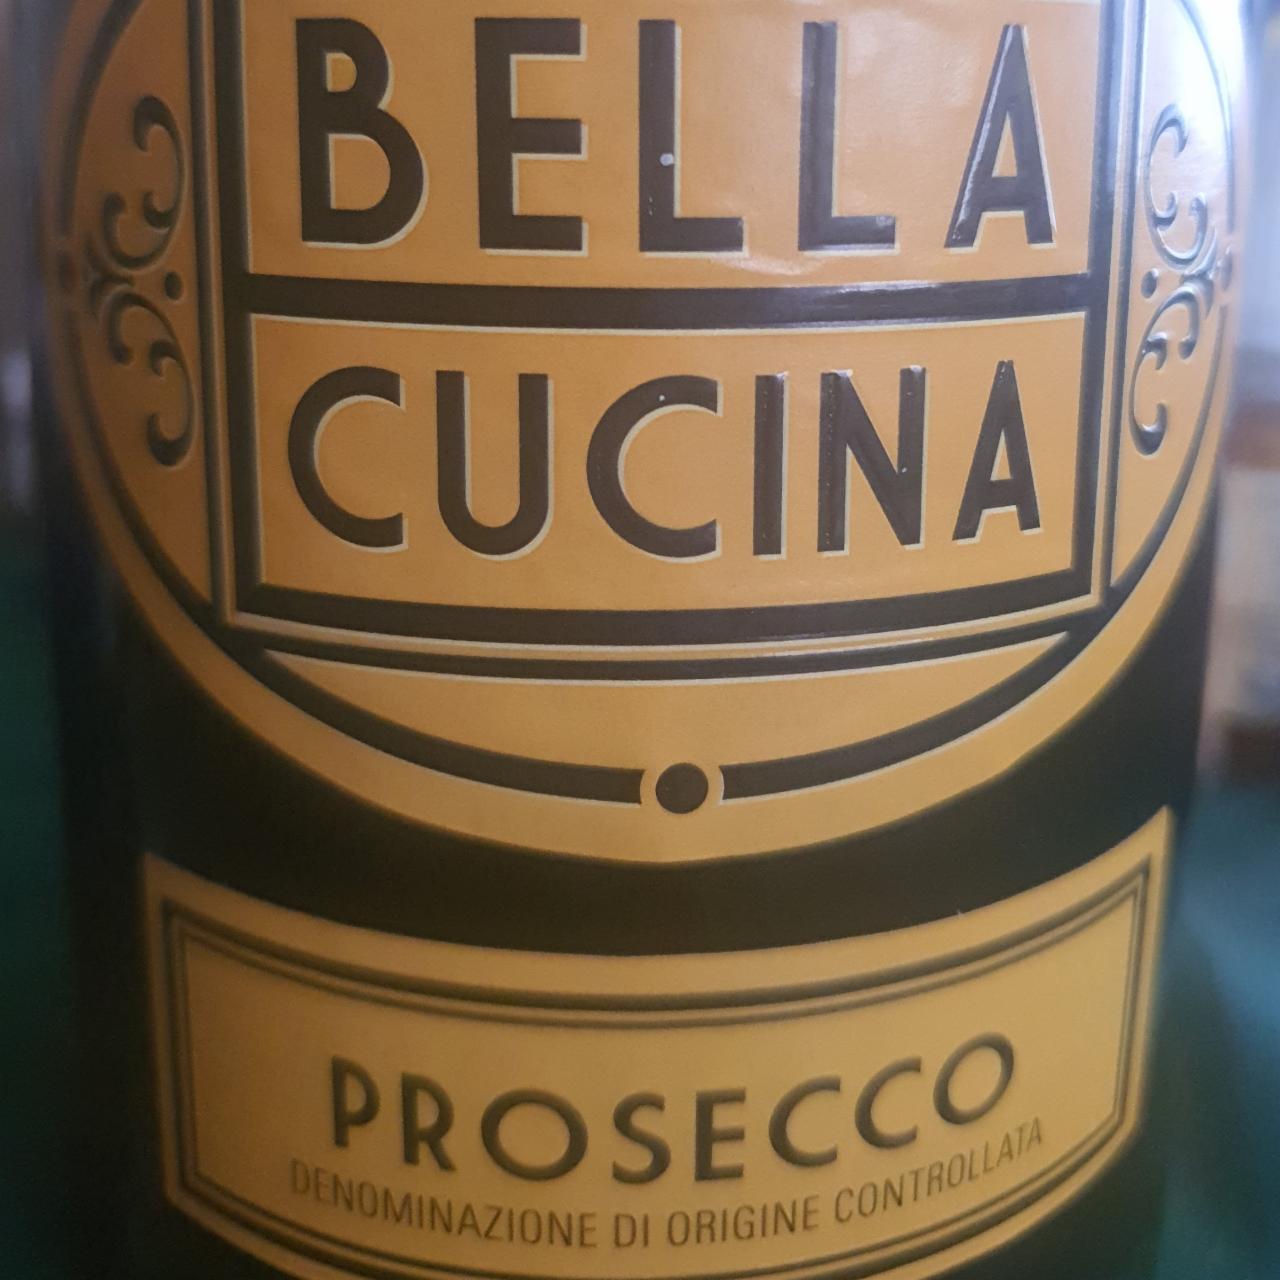 Fotografie - Prosecco extra dry Bella Cucina